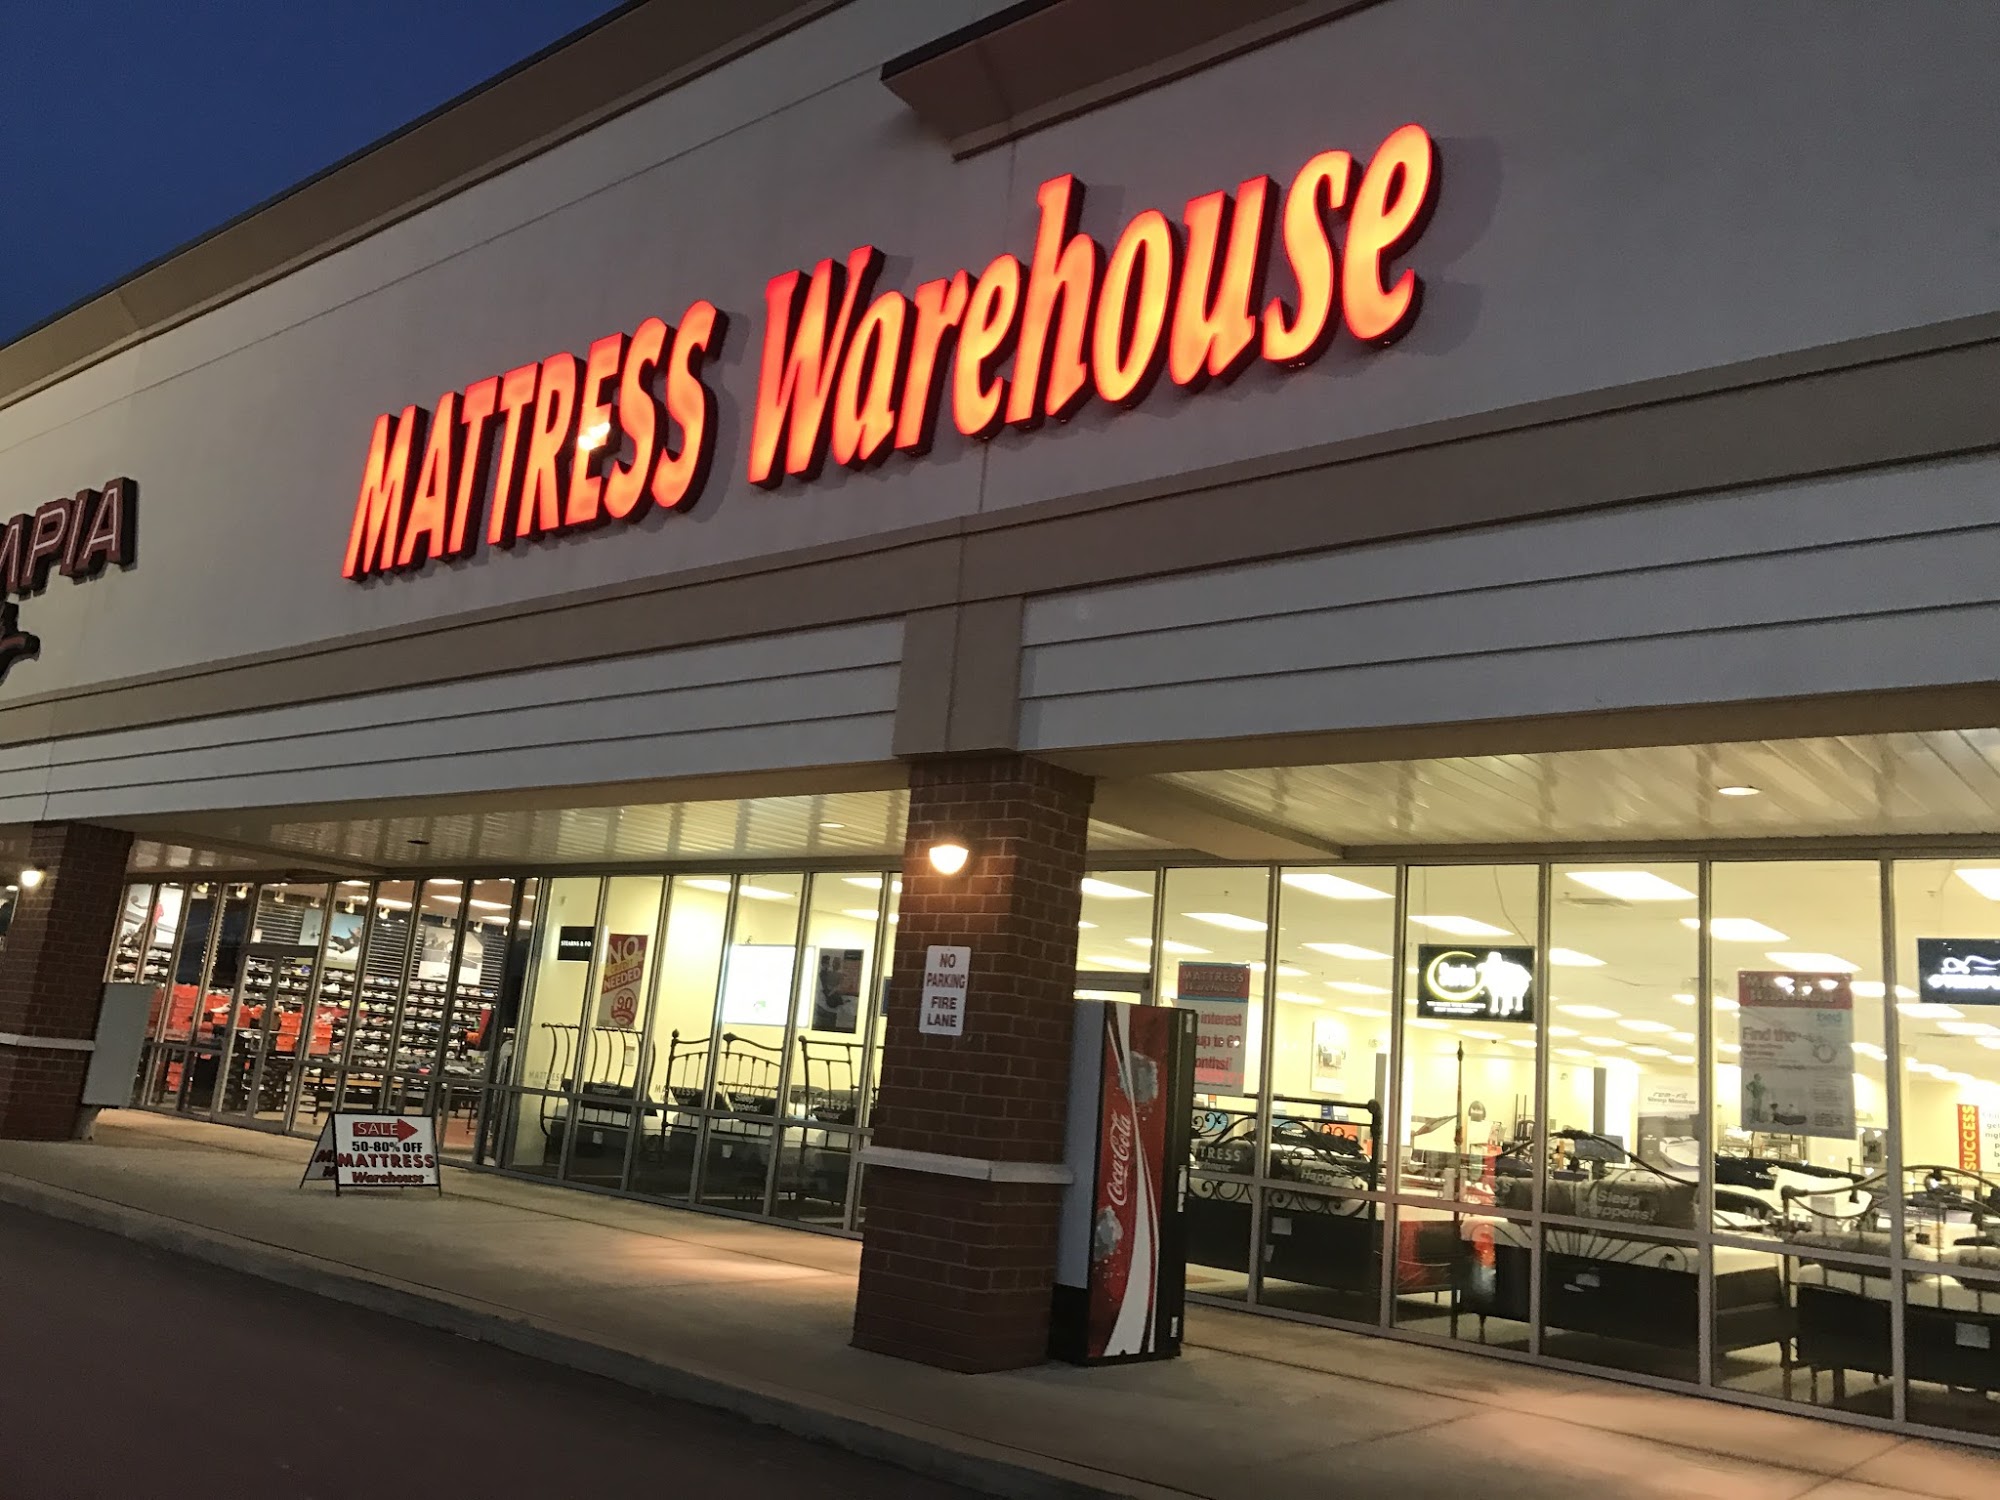 Mattress Warehouse of Bloomsburg